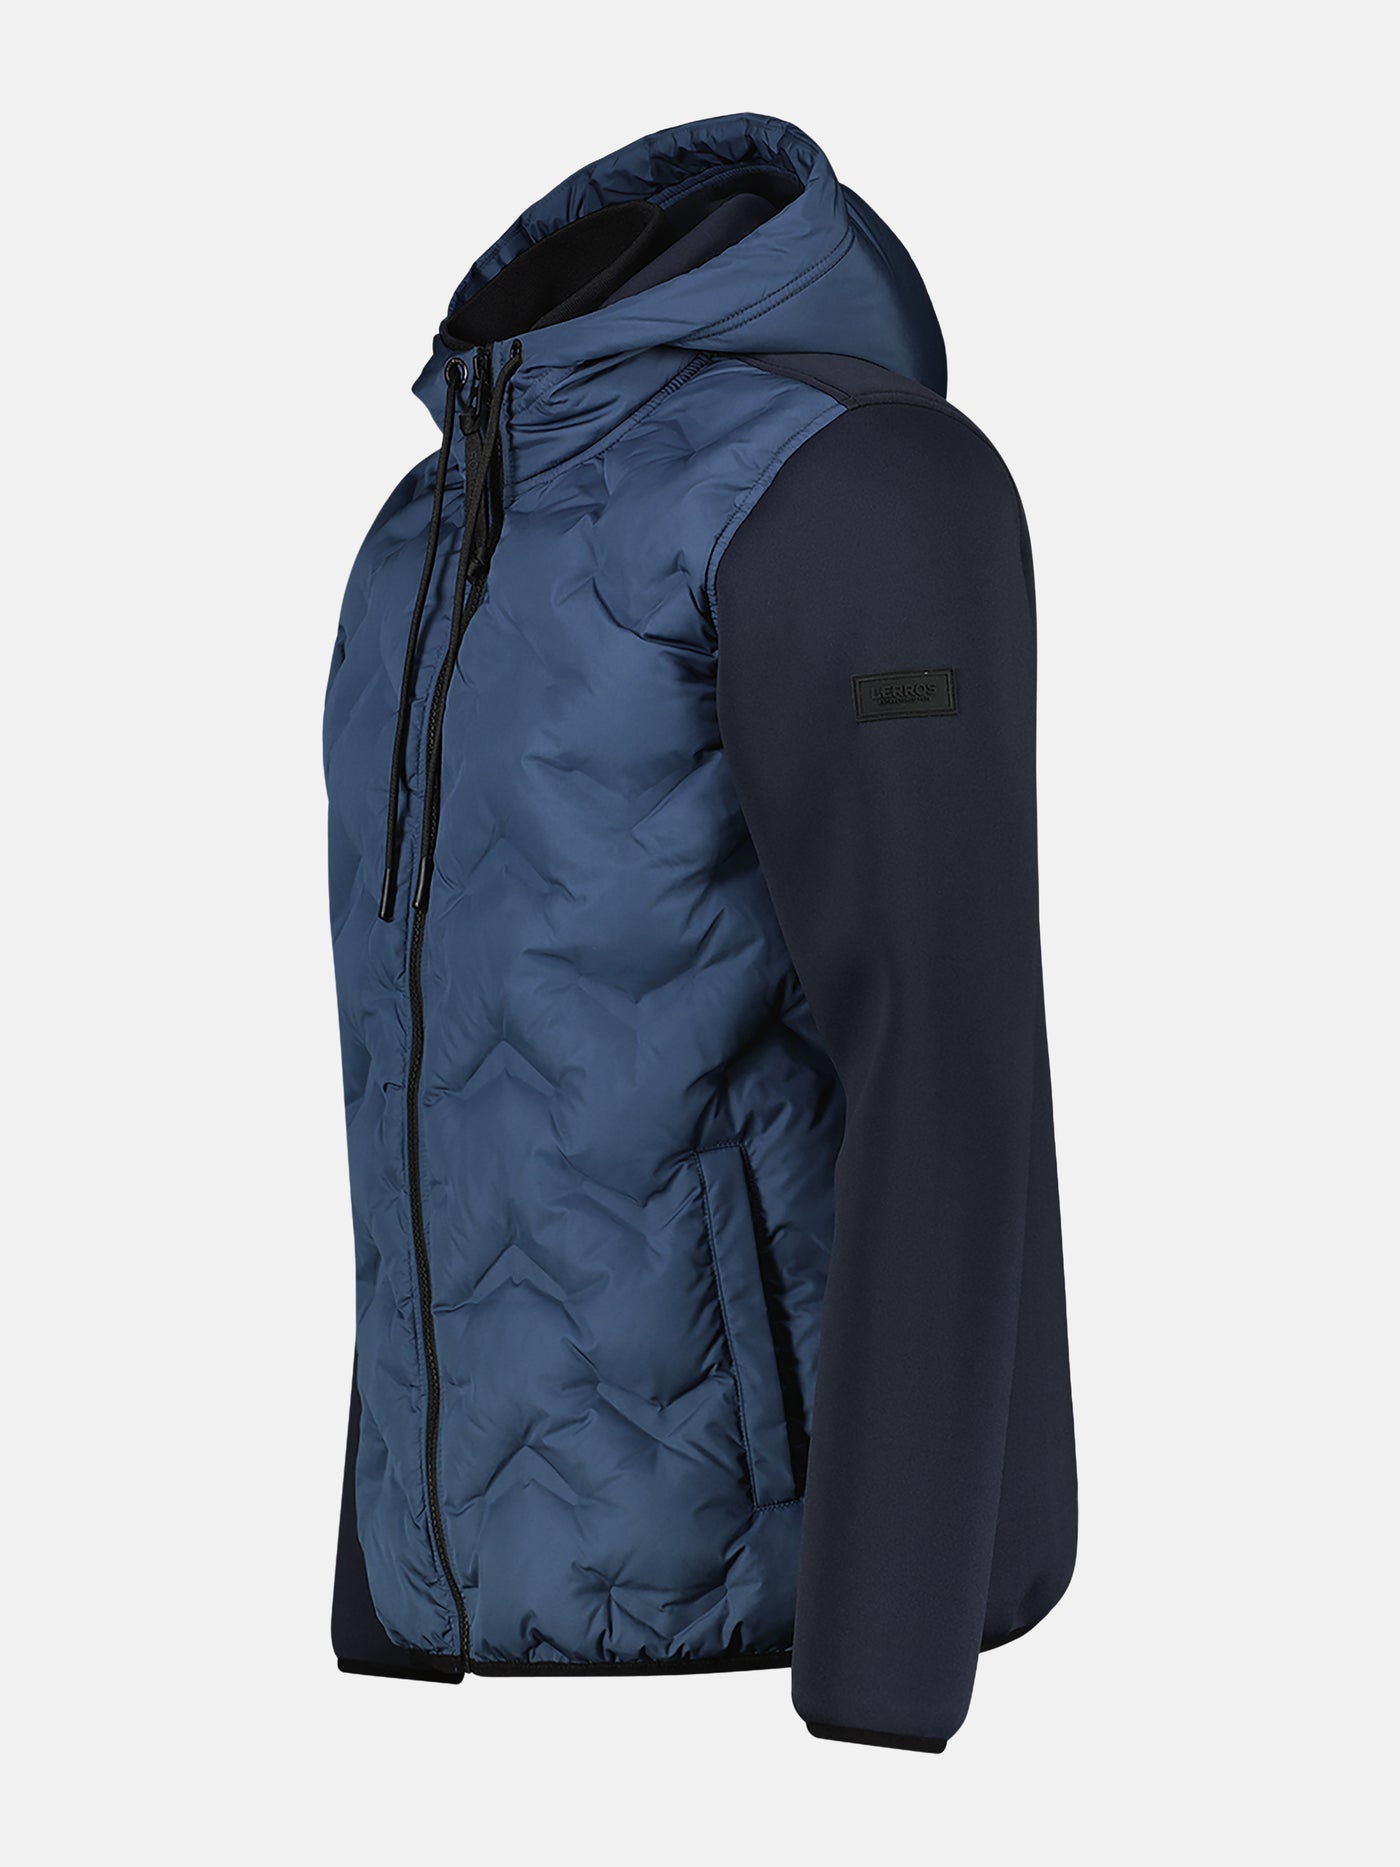 Sweat jacket with nylon front